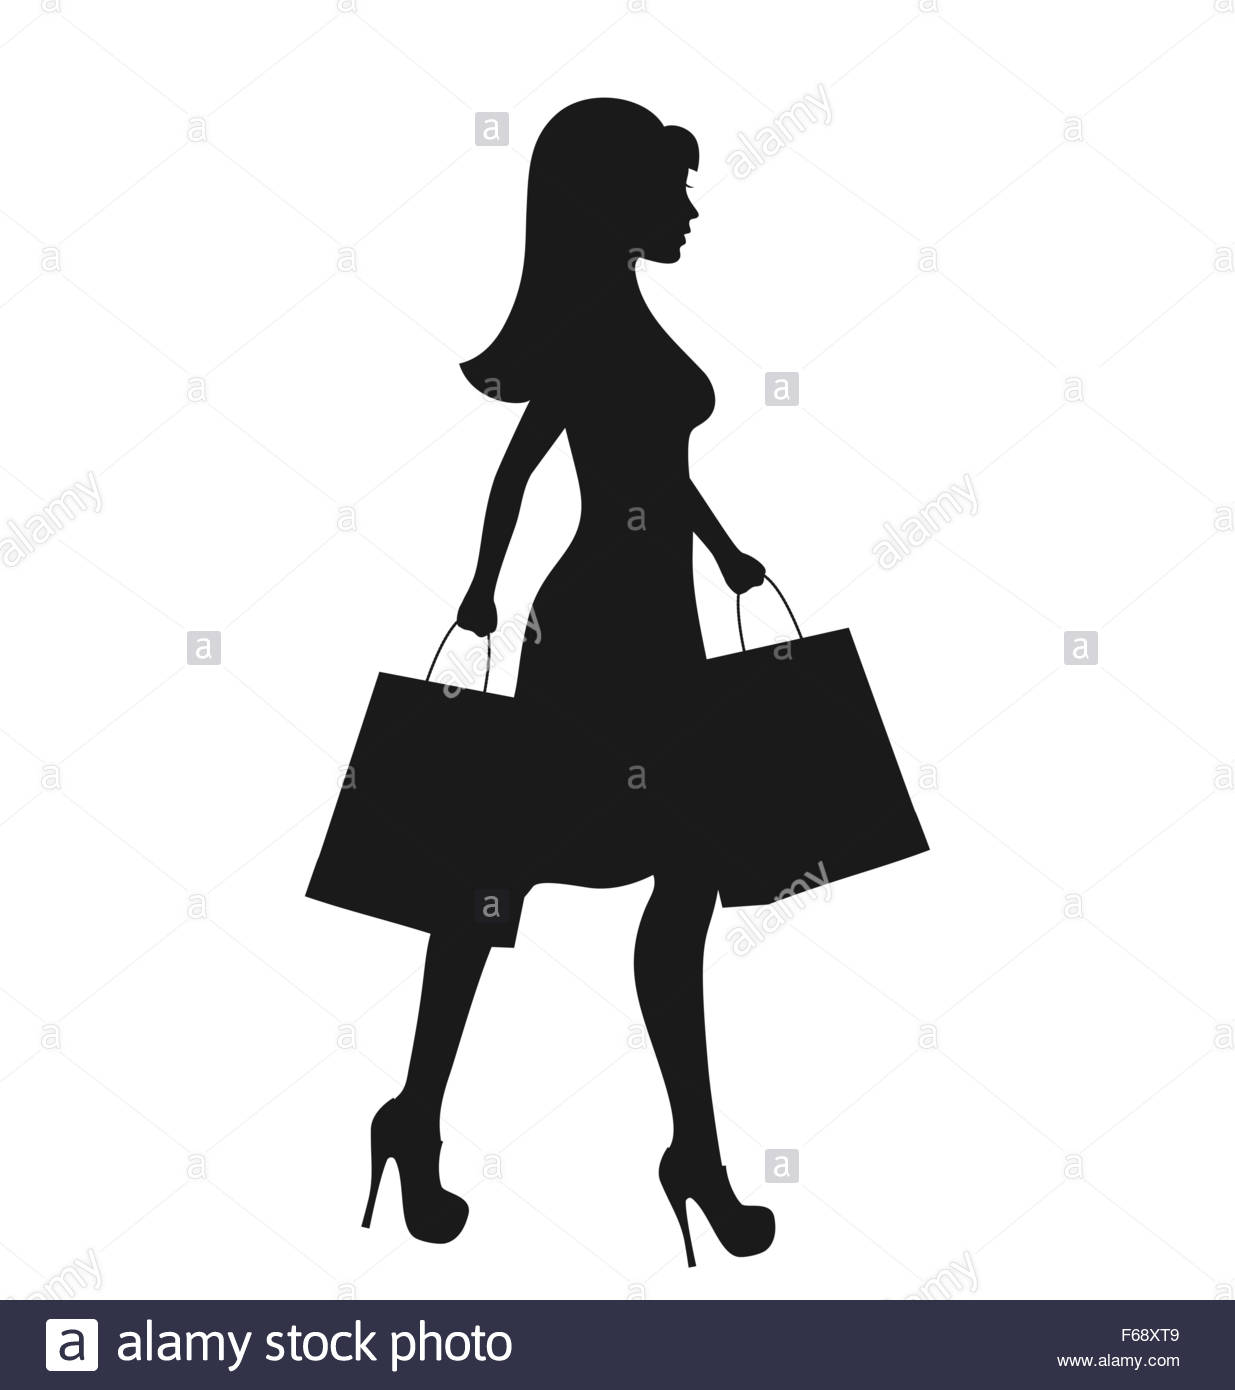 Woman face silhouette icon | Stock Vector | Colourbox